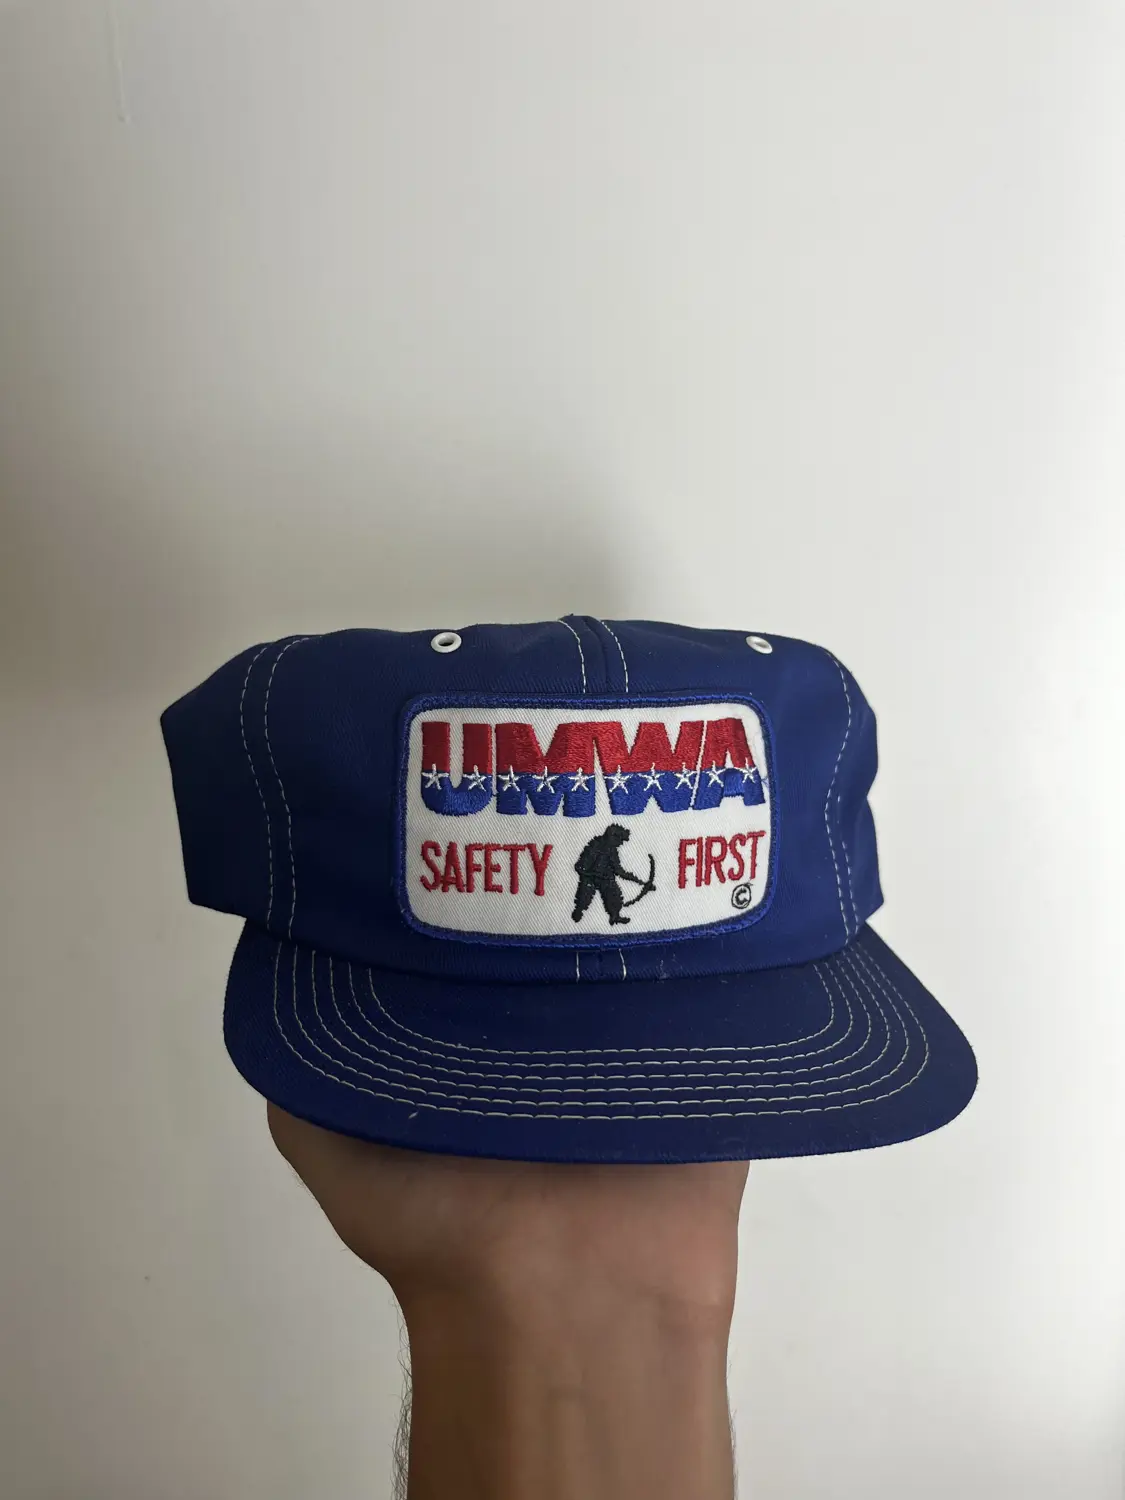 UMWA safety first hat